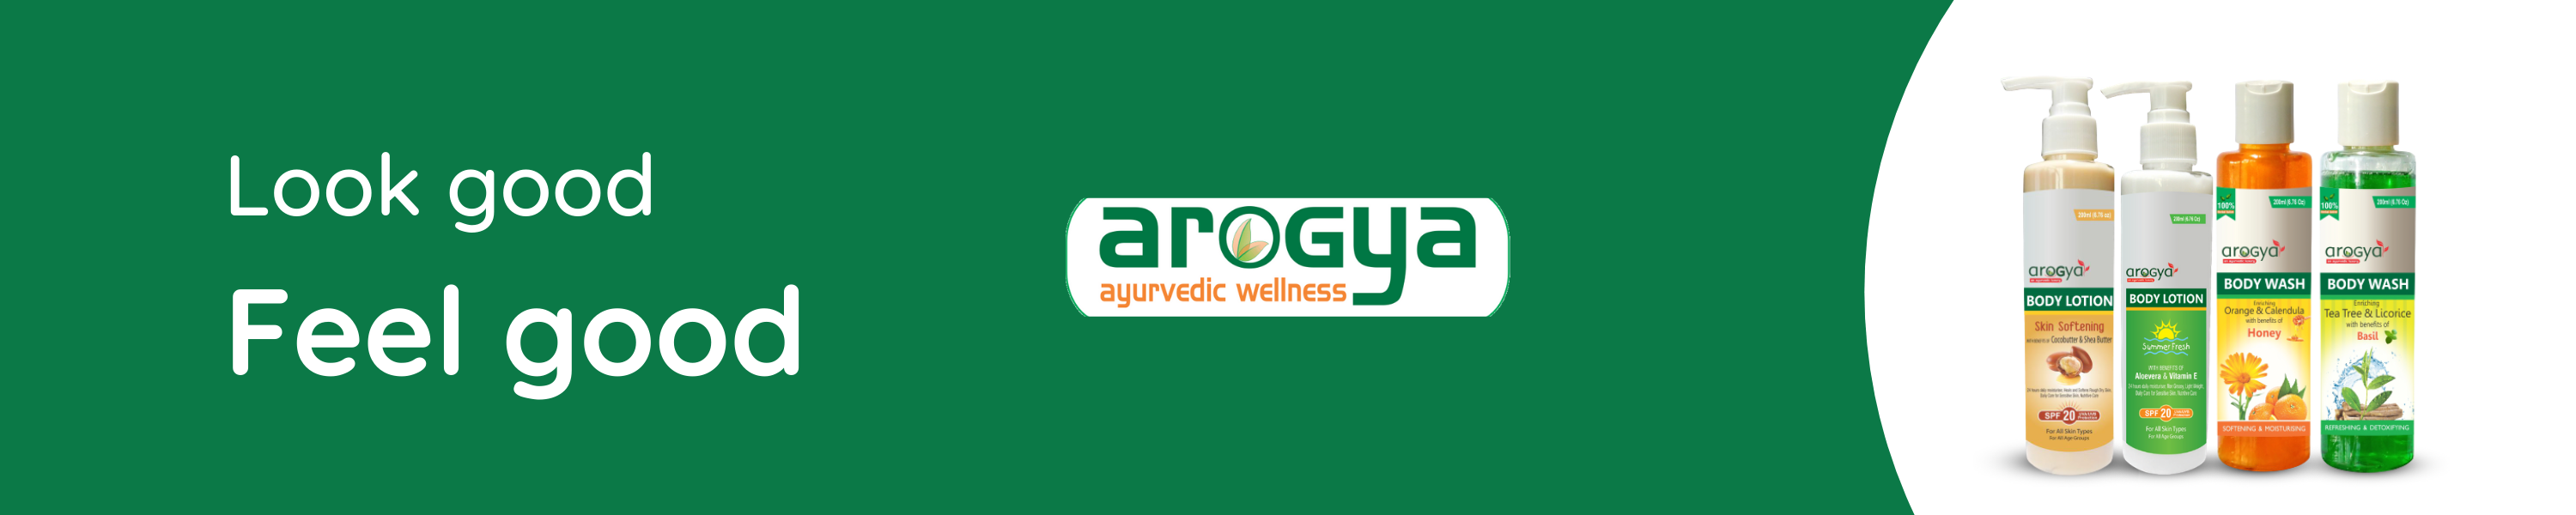 arogya body wash and body l...